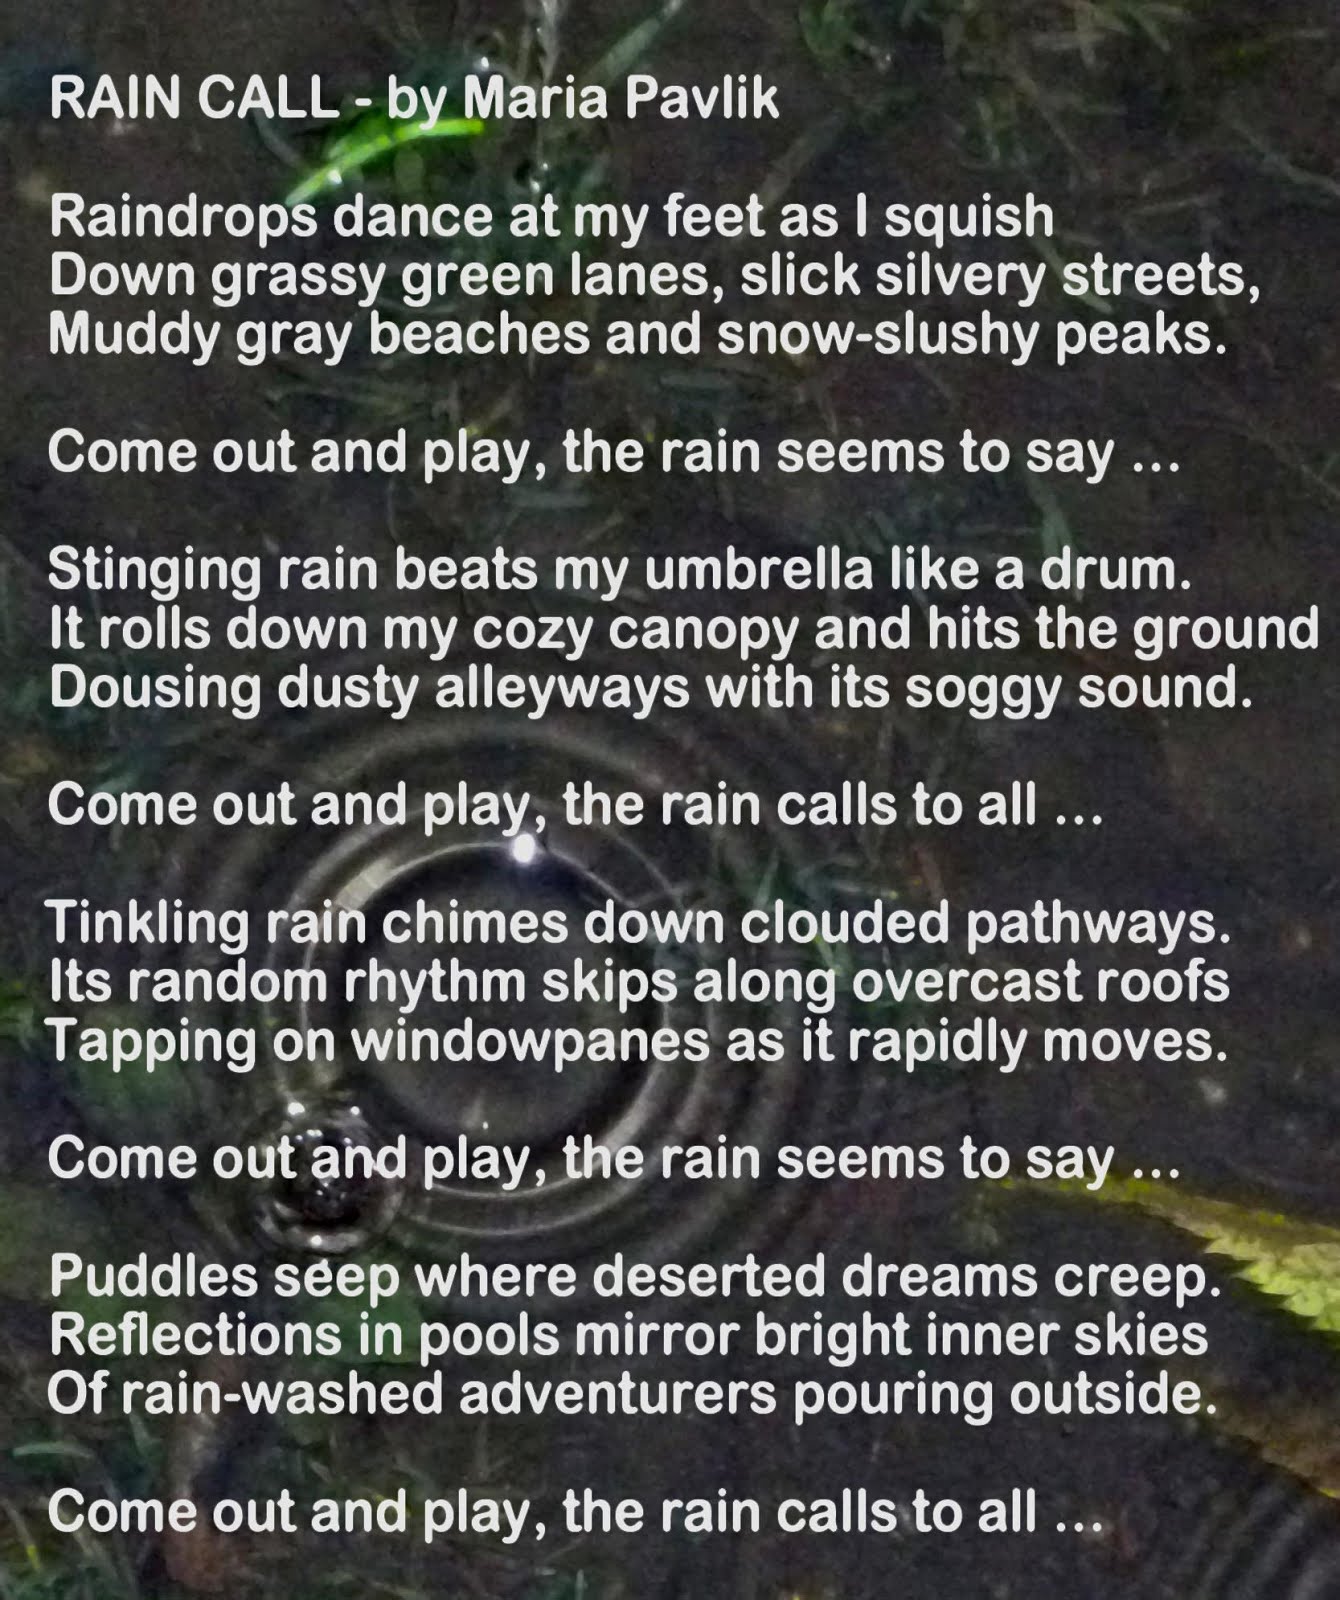 COME OUT AND PLAY aka RAIN CALL - by Maria Pavlik